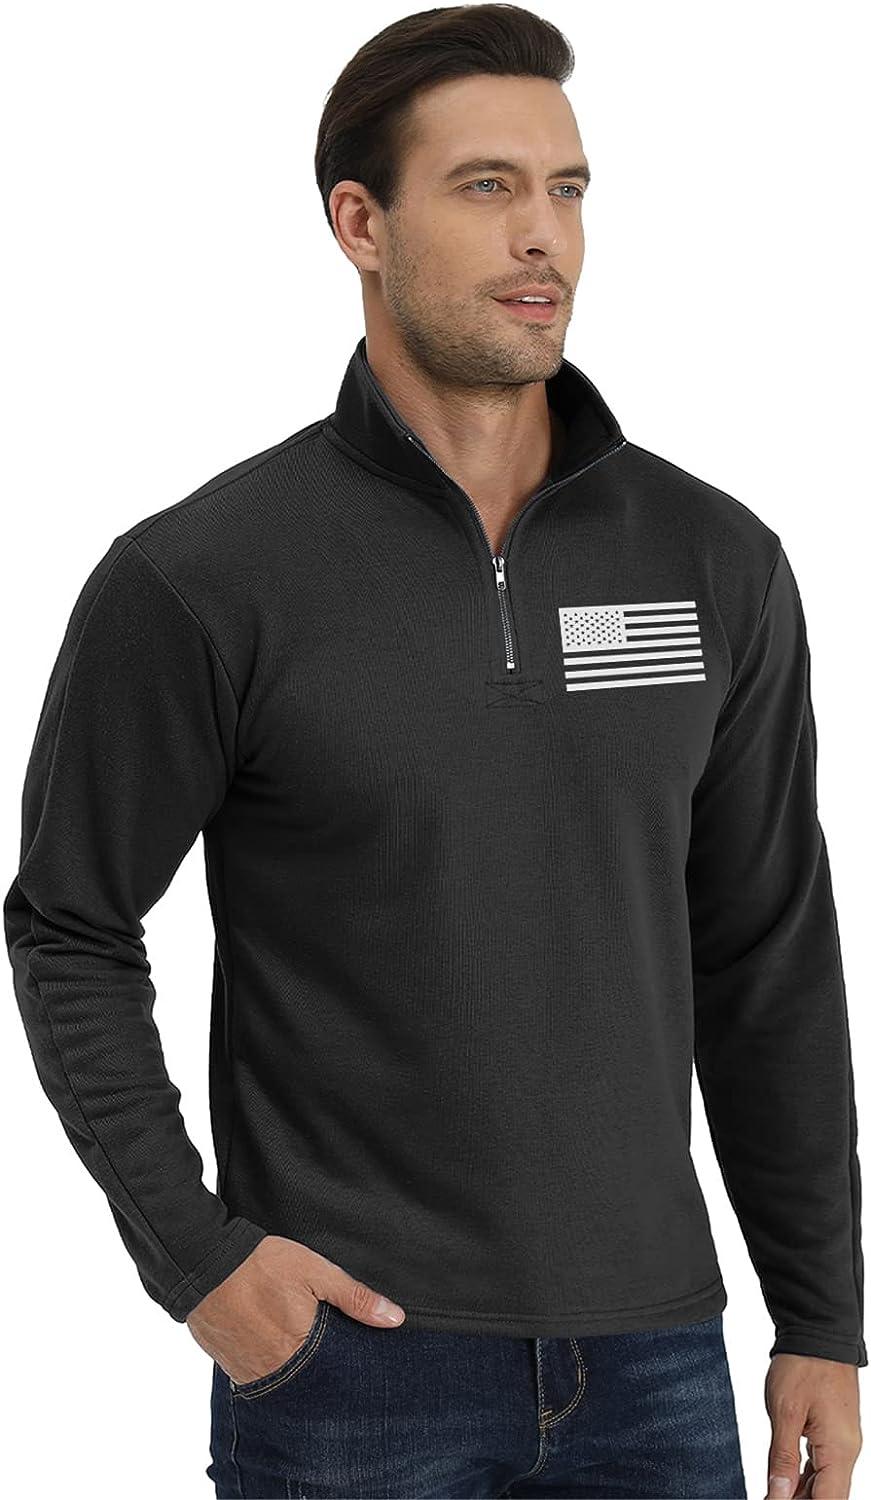 Graphic Hoody - Americana Sleeve - Pullovers